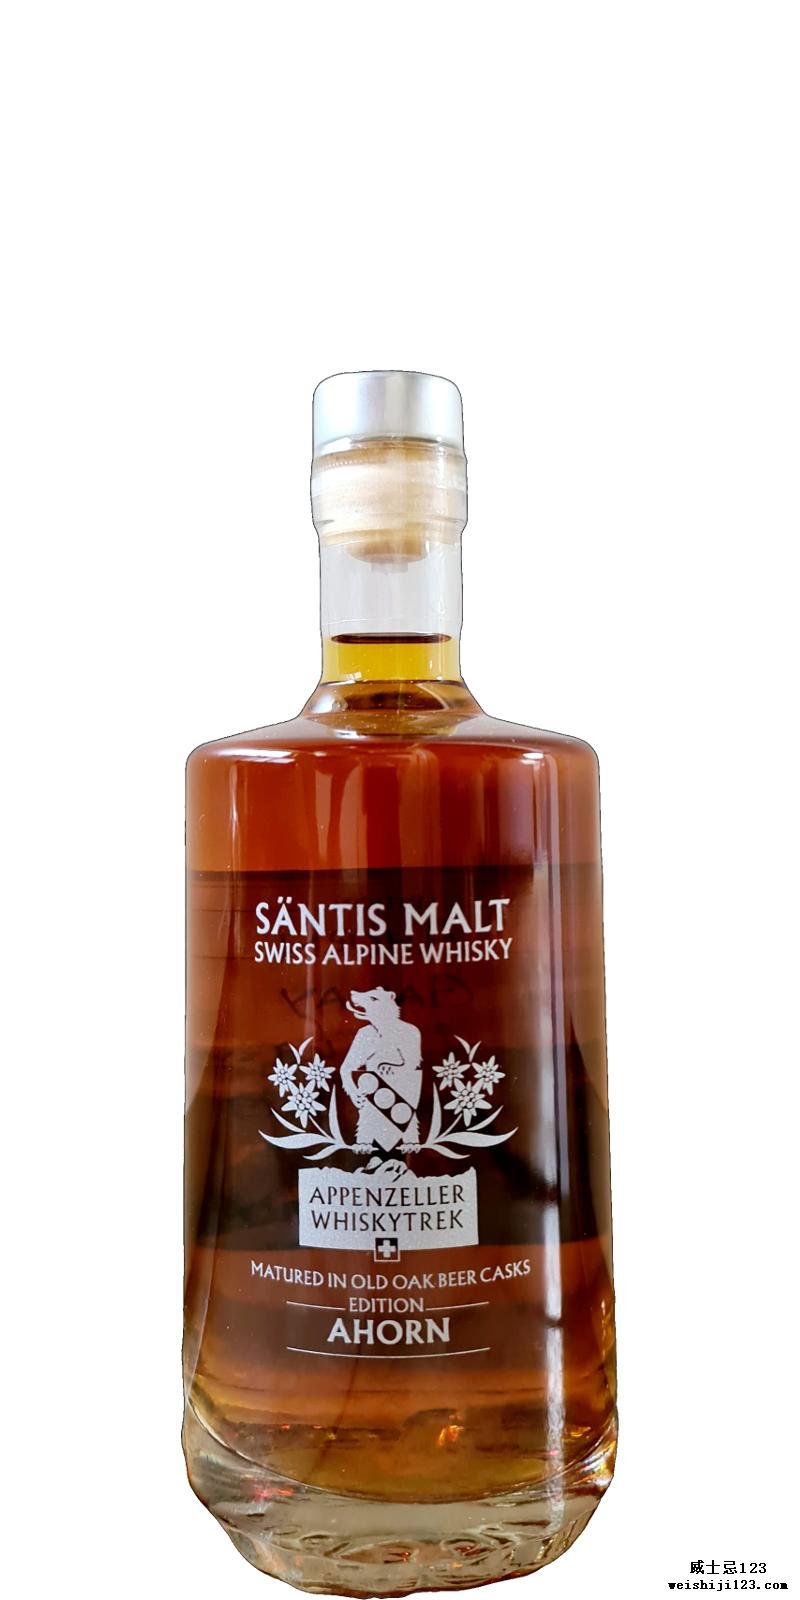 Säntis Malt Whiskytrek - Edition Ahorn